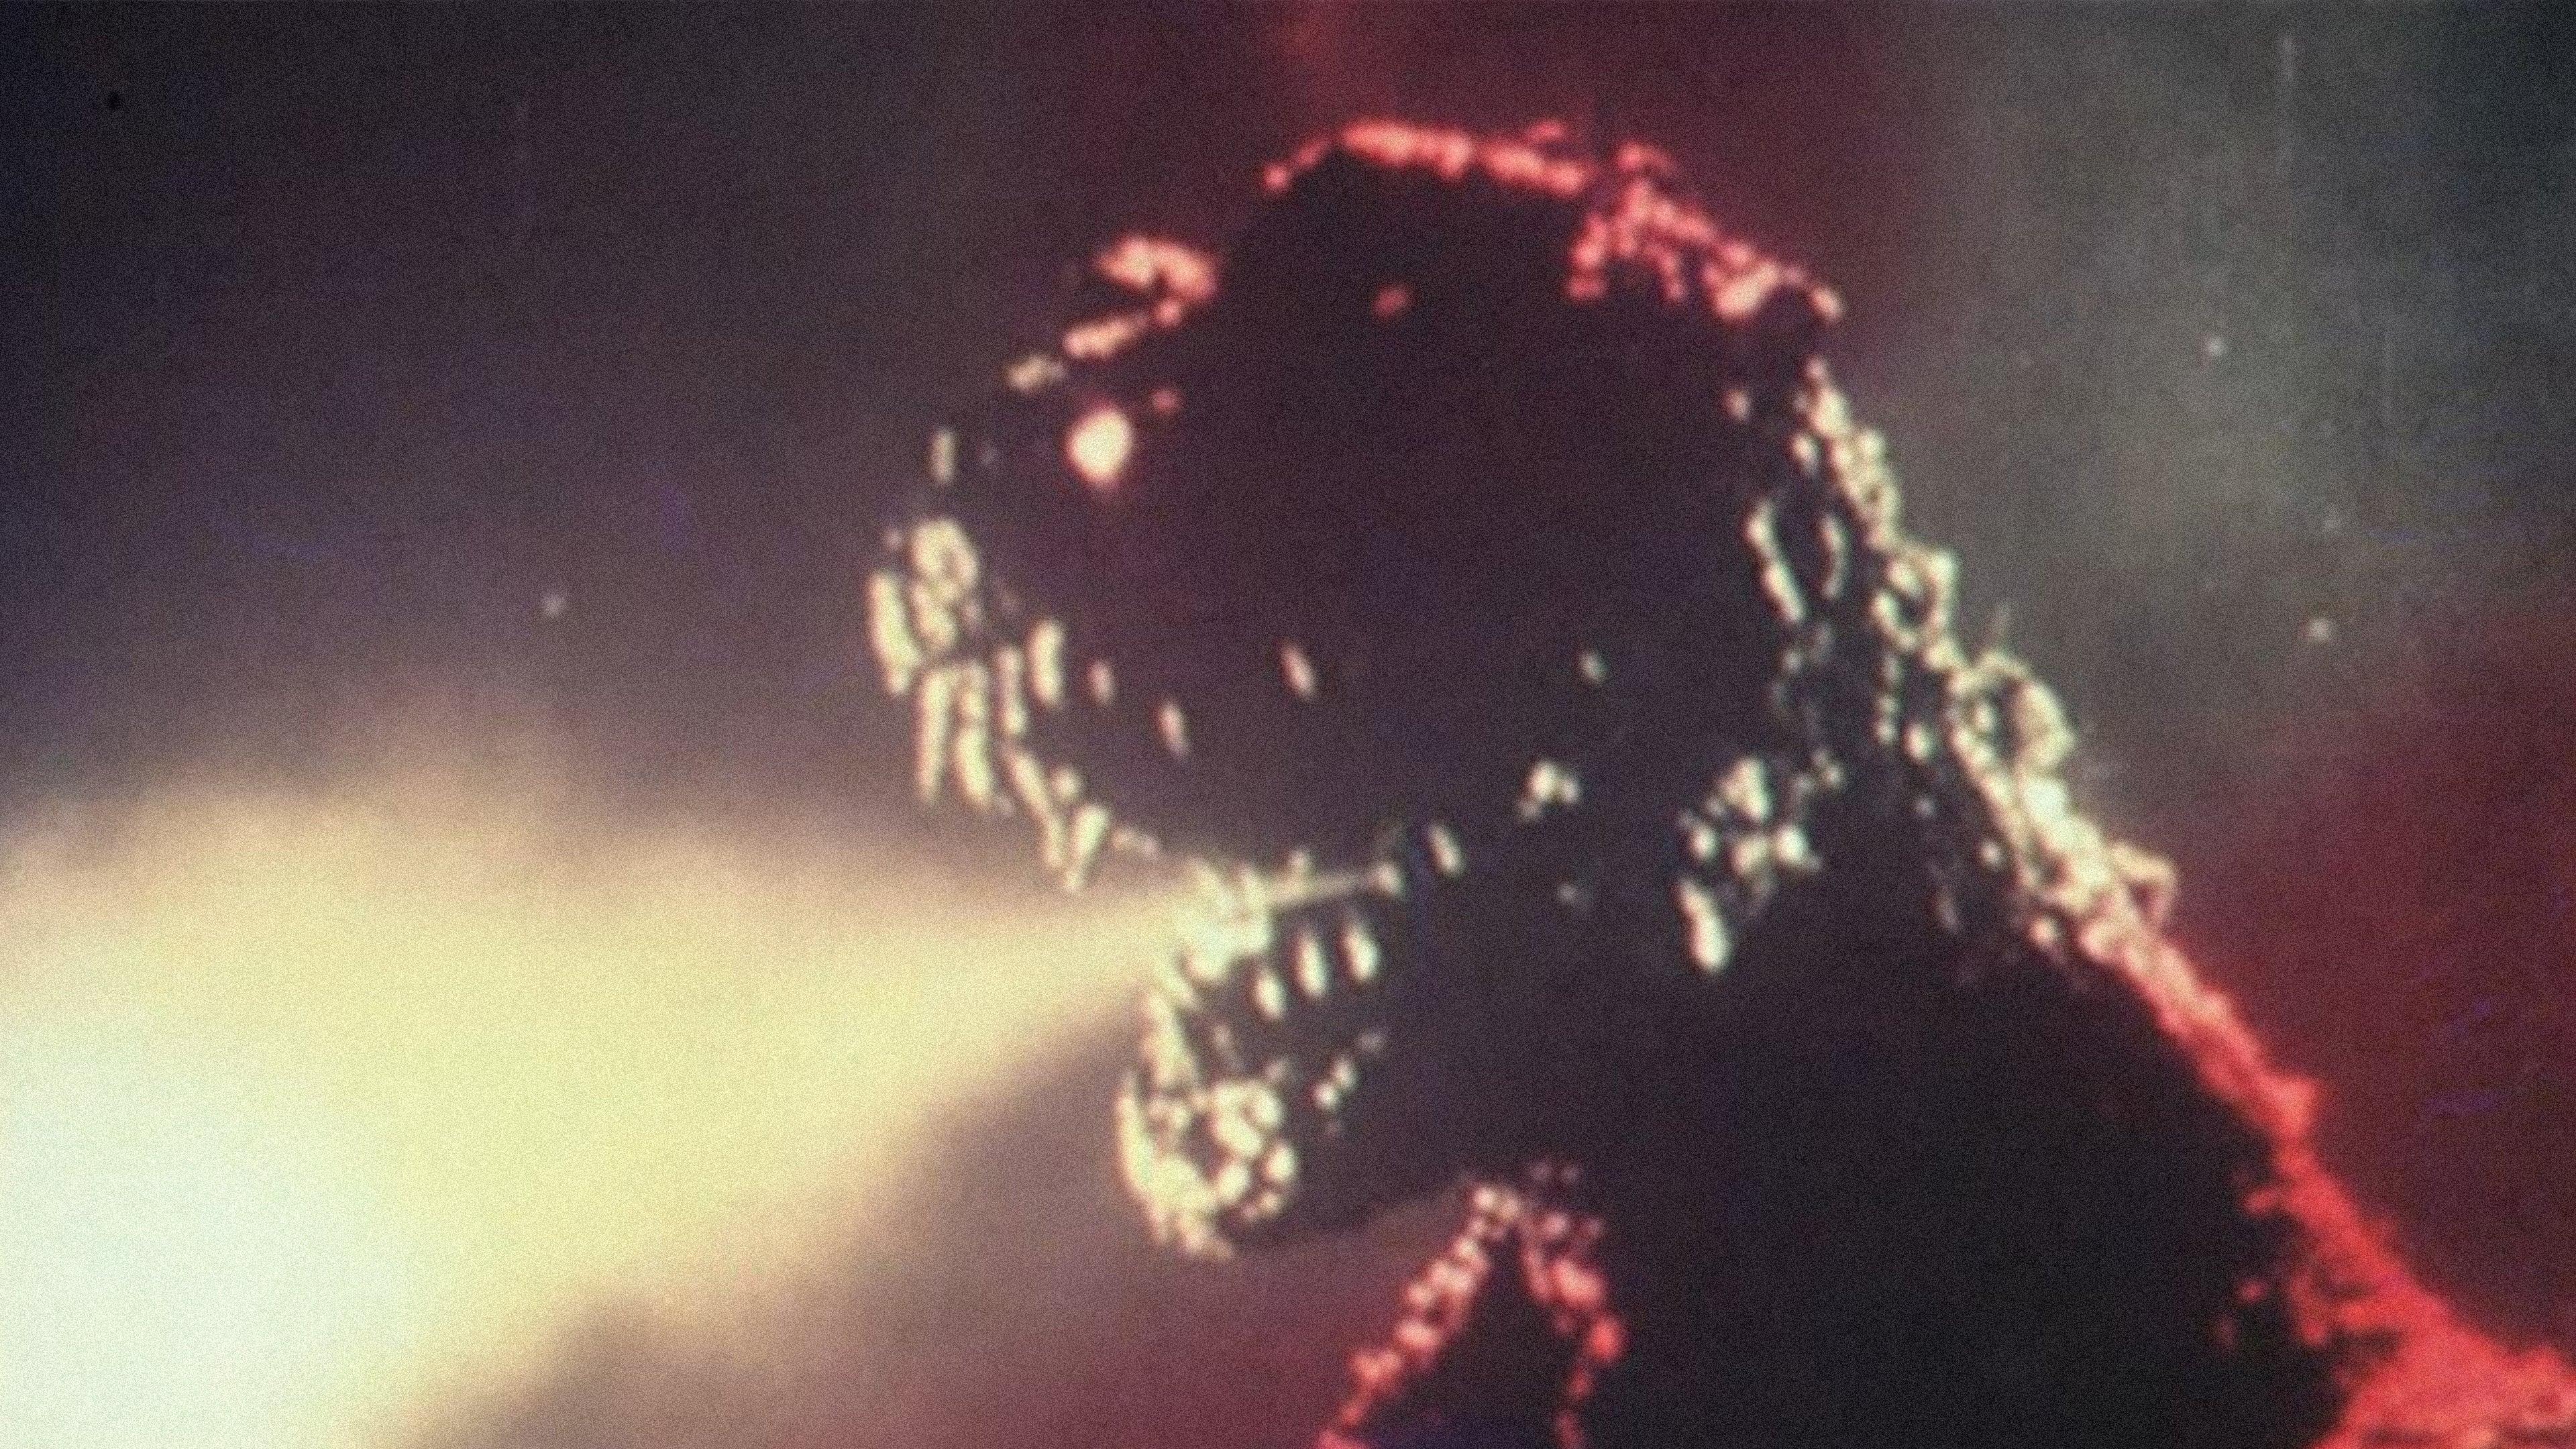 Godzilla backdrop